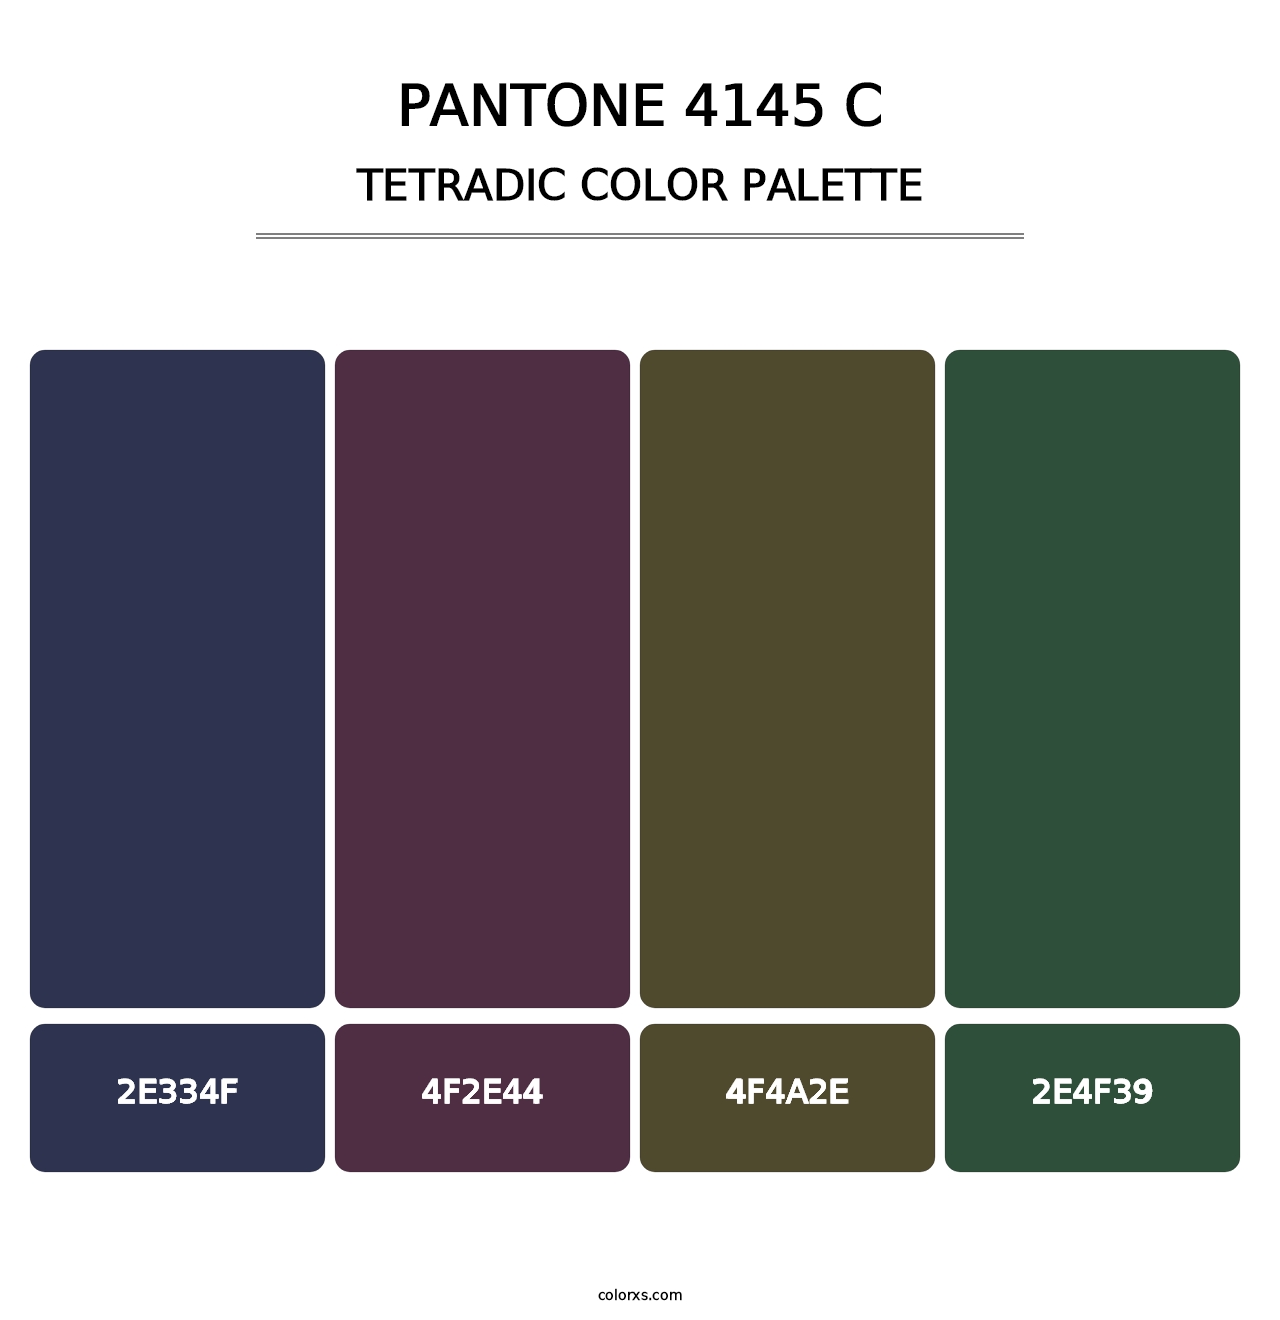 PANTONE 4145 C - Tetradic Color Palette